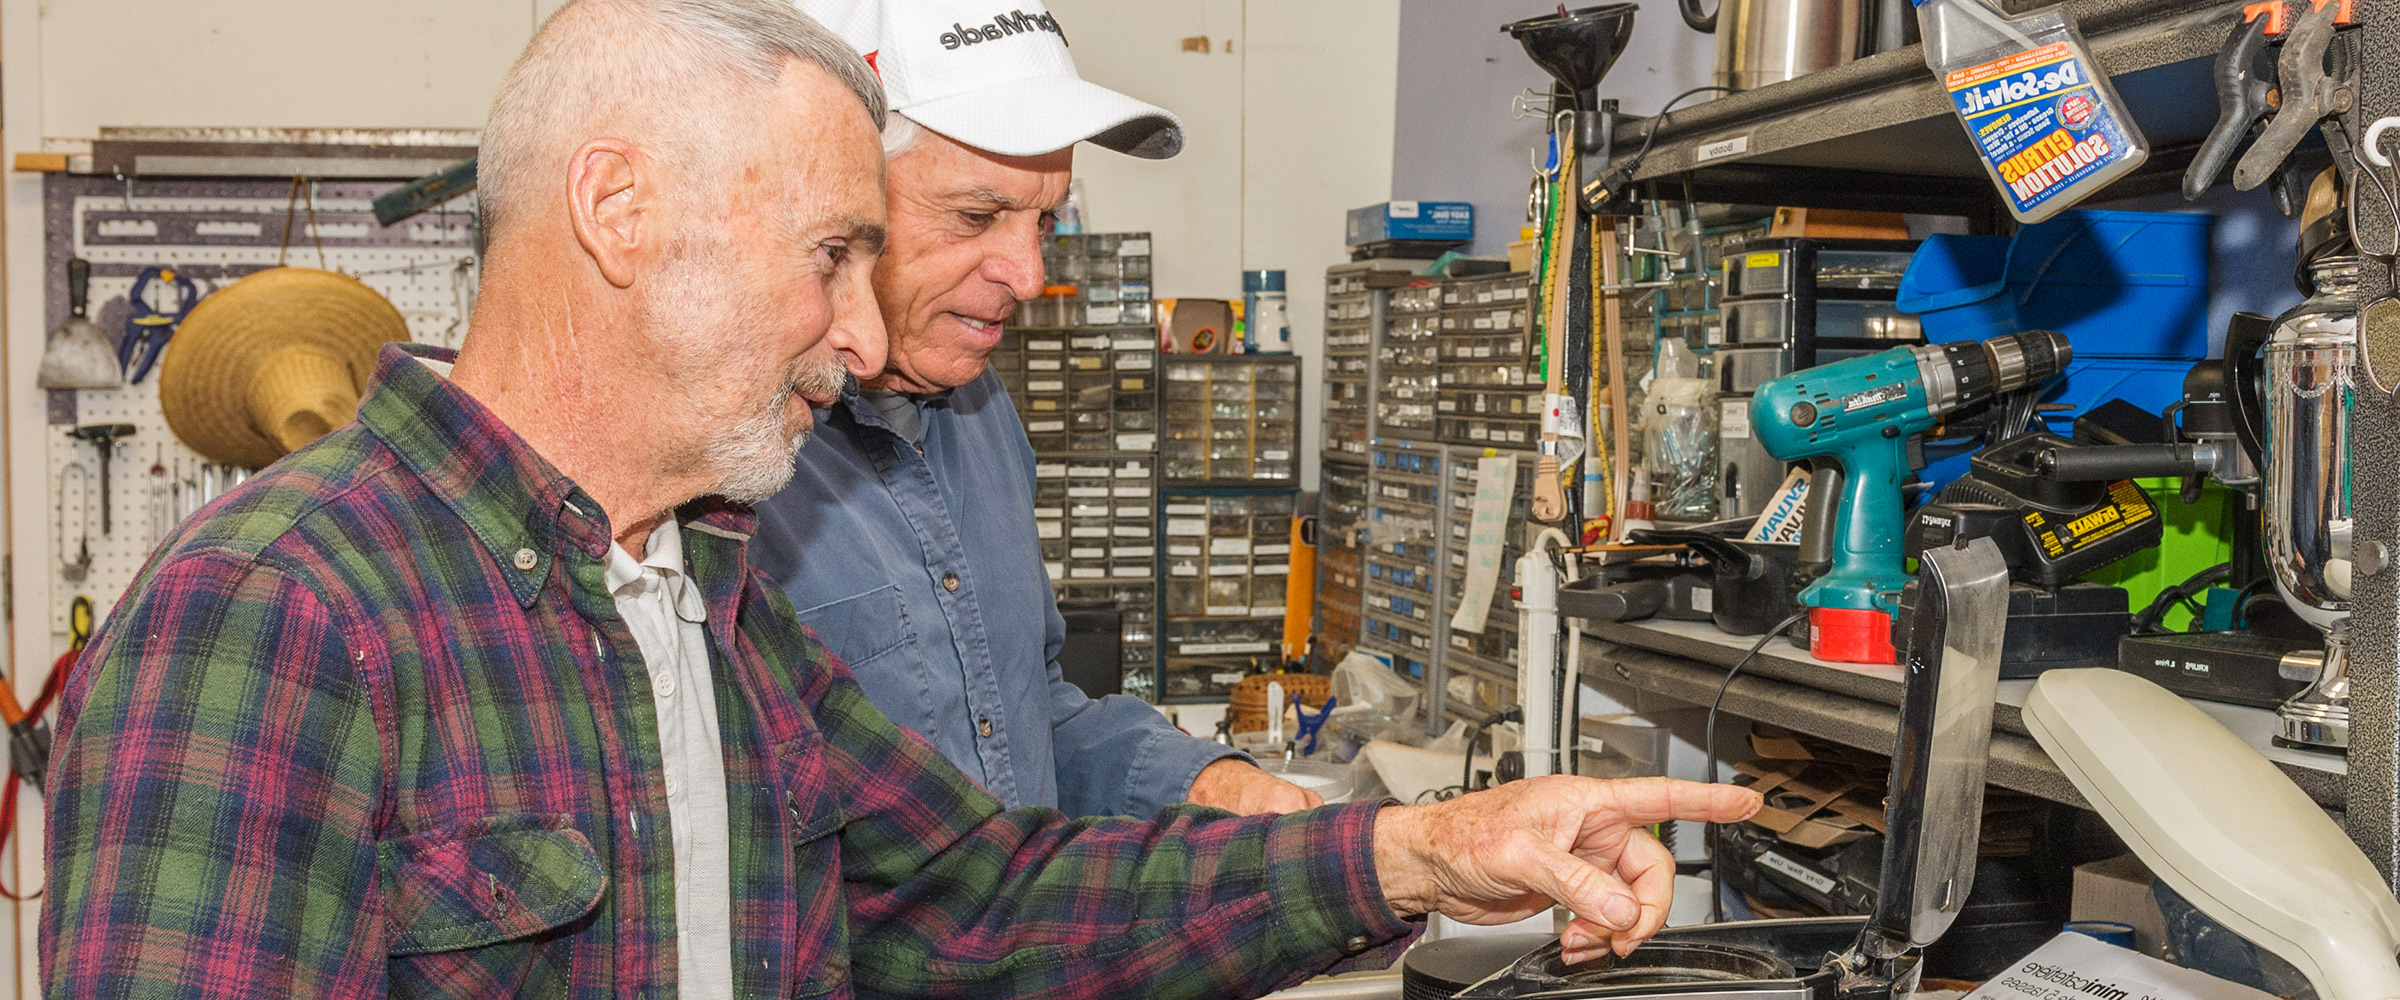 2 volunteers prepare electronics for re-sale